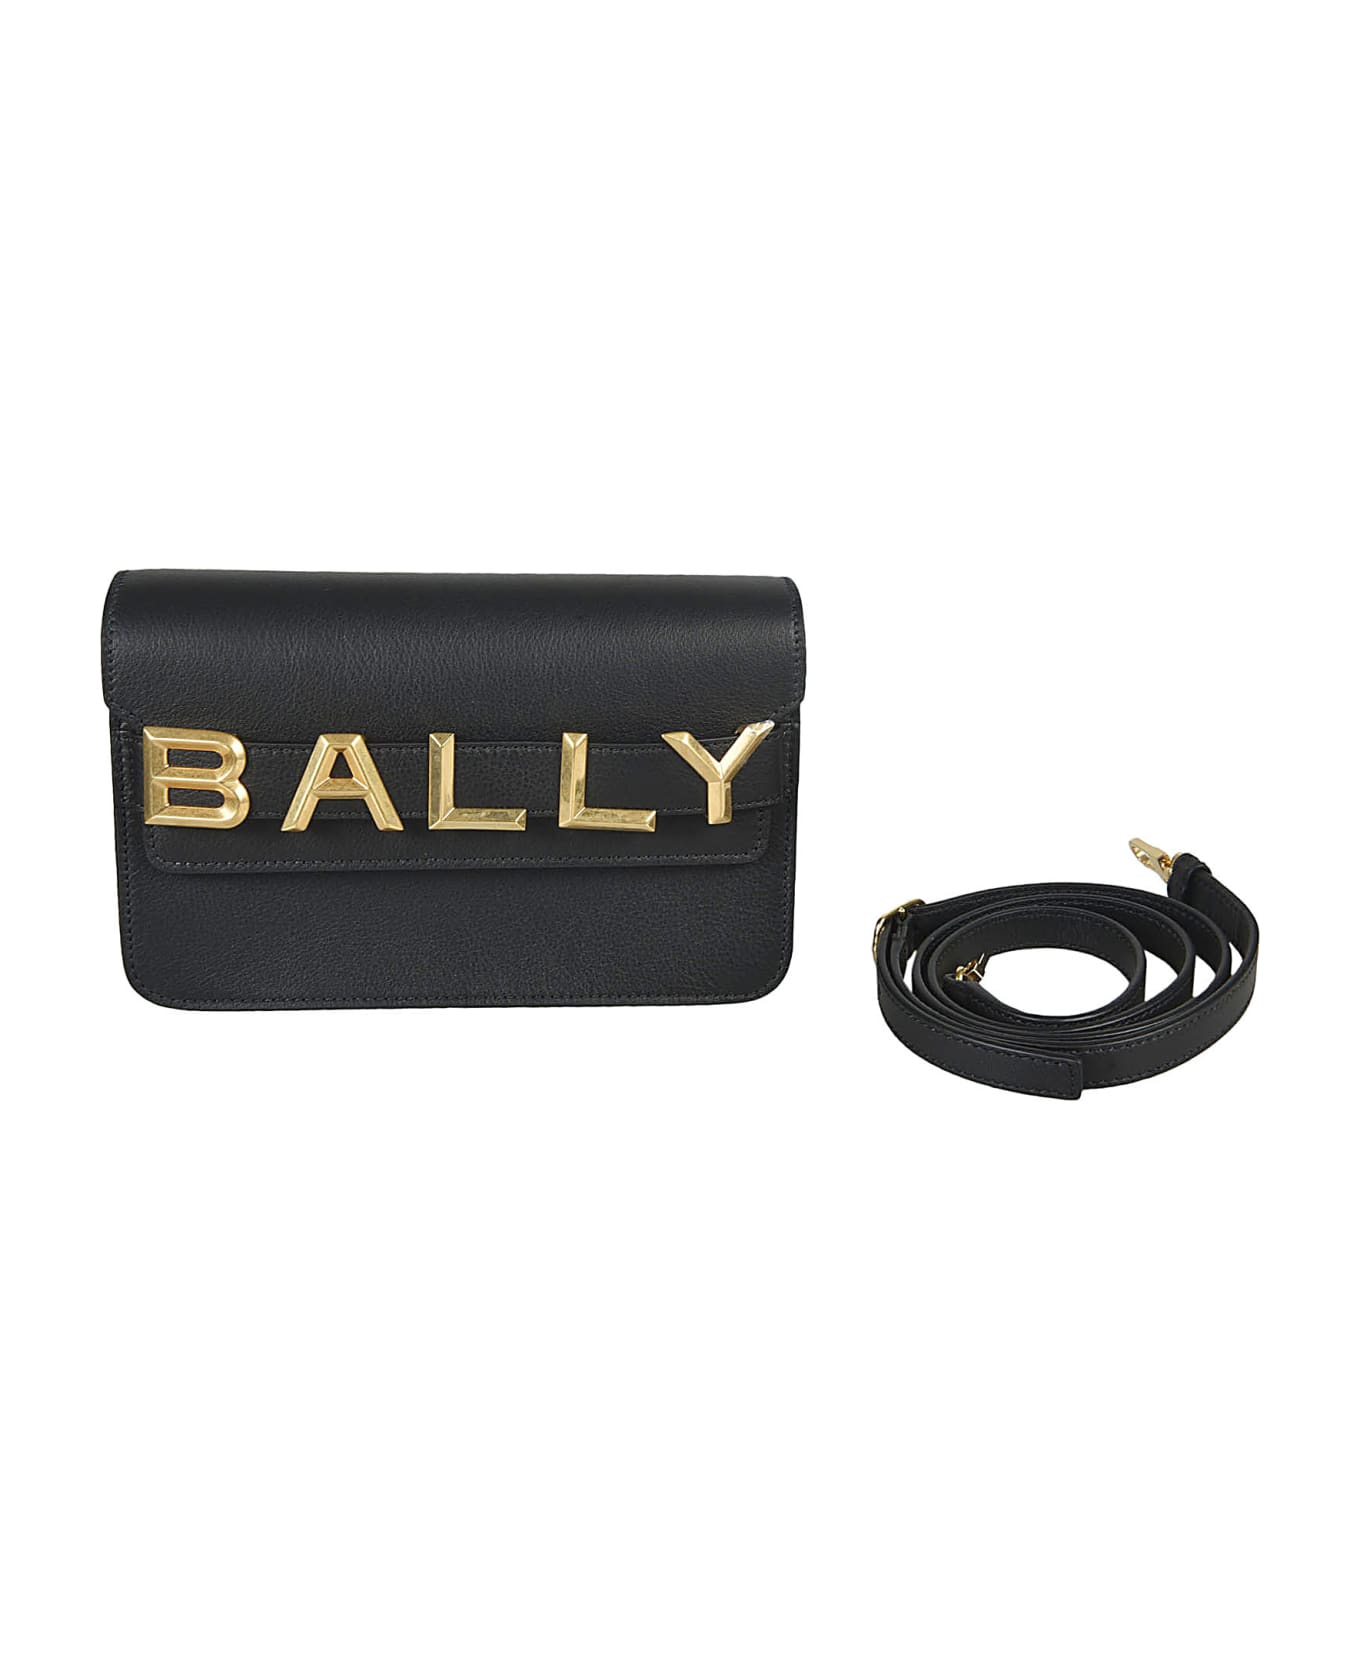 Bally Logo Crossbody Bag - Black/Gold